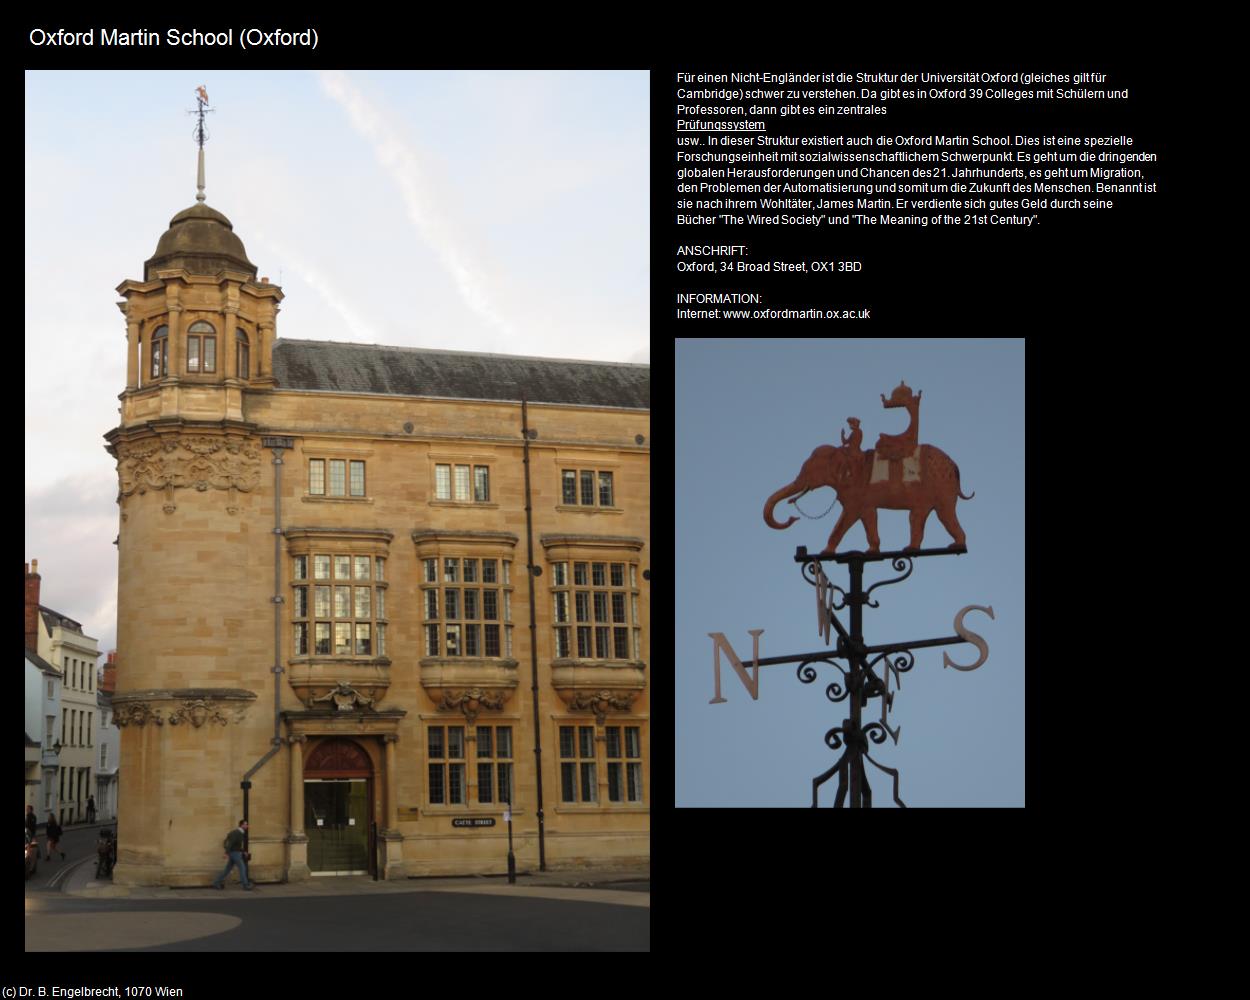 Oxford Martin School (Oxford, England) in Kulturatlas-ENGLAND und WALES(c)B.Engelbrecht